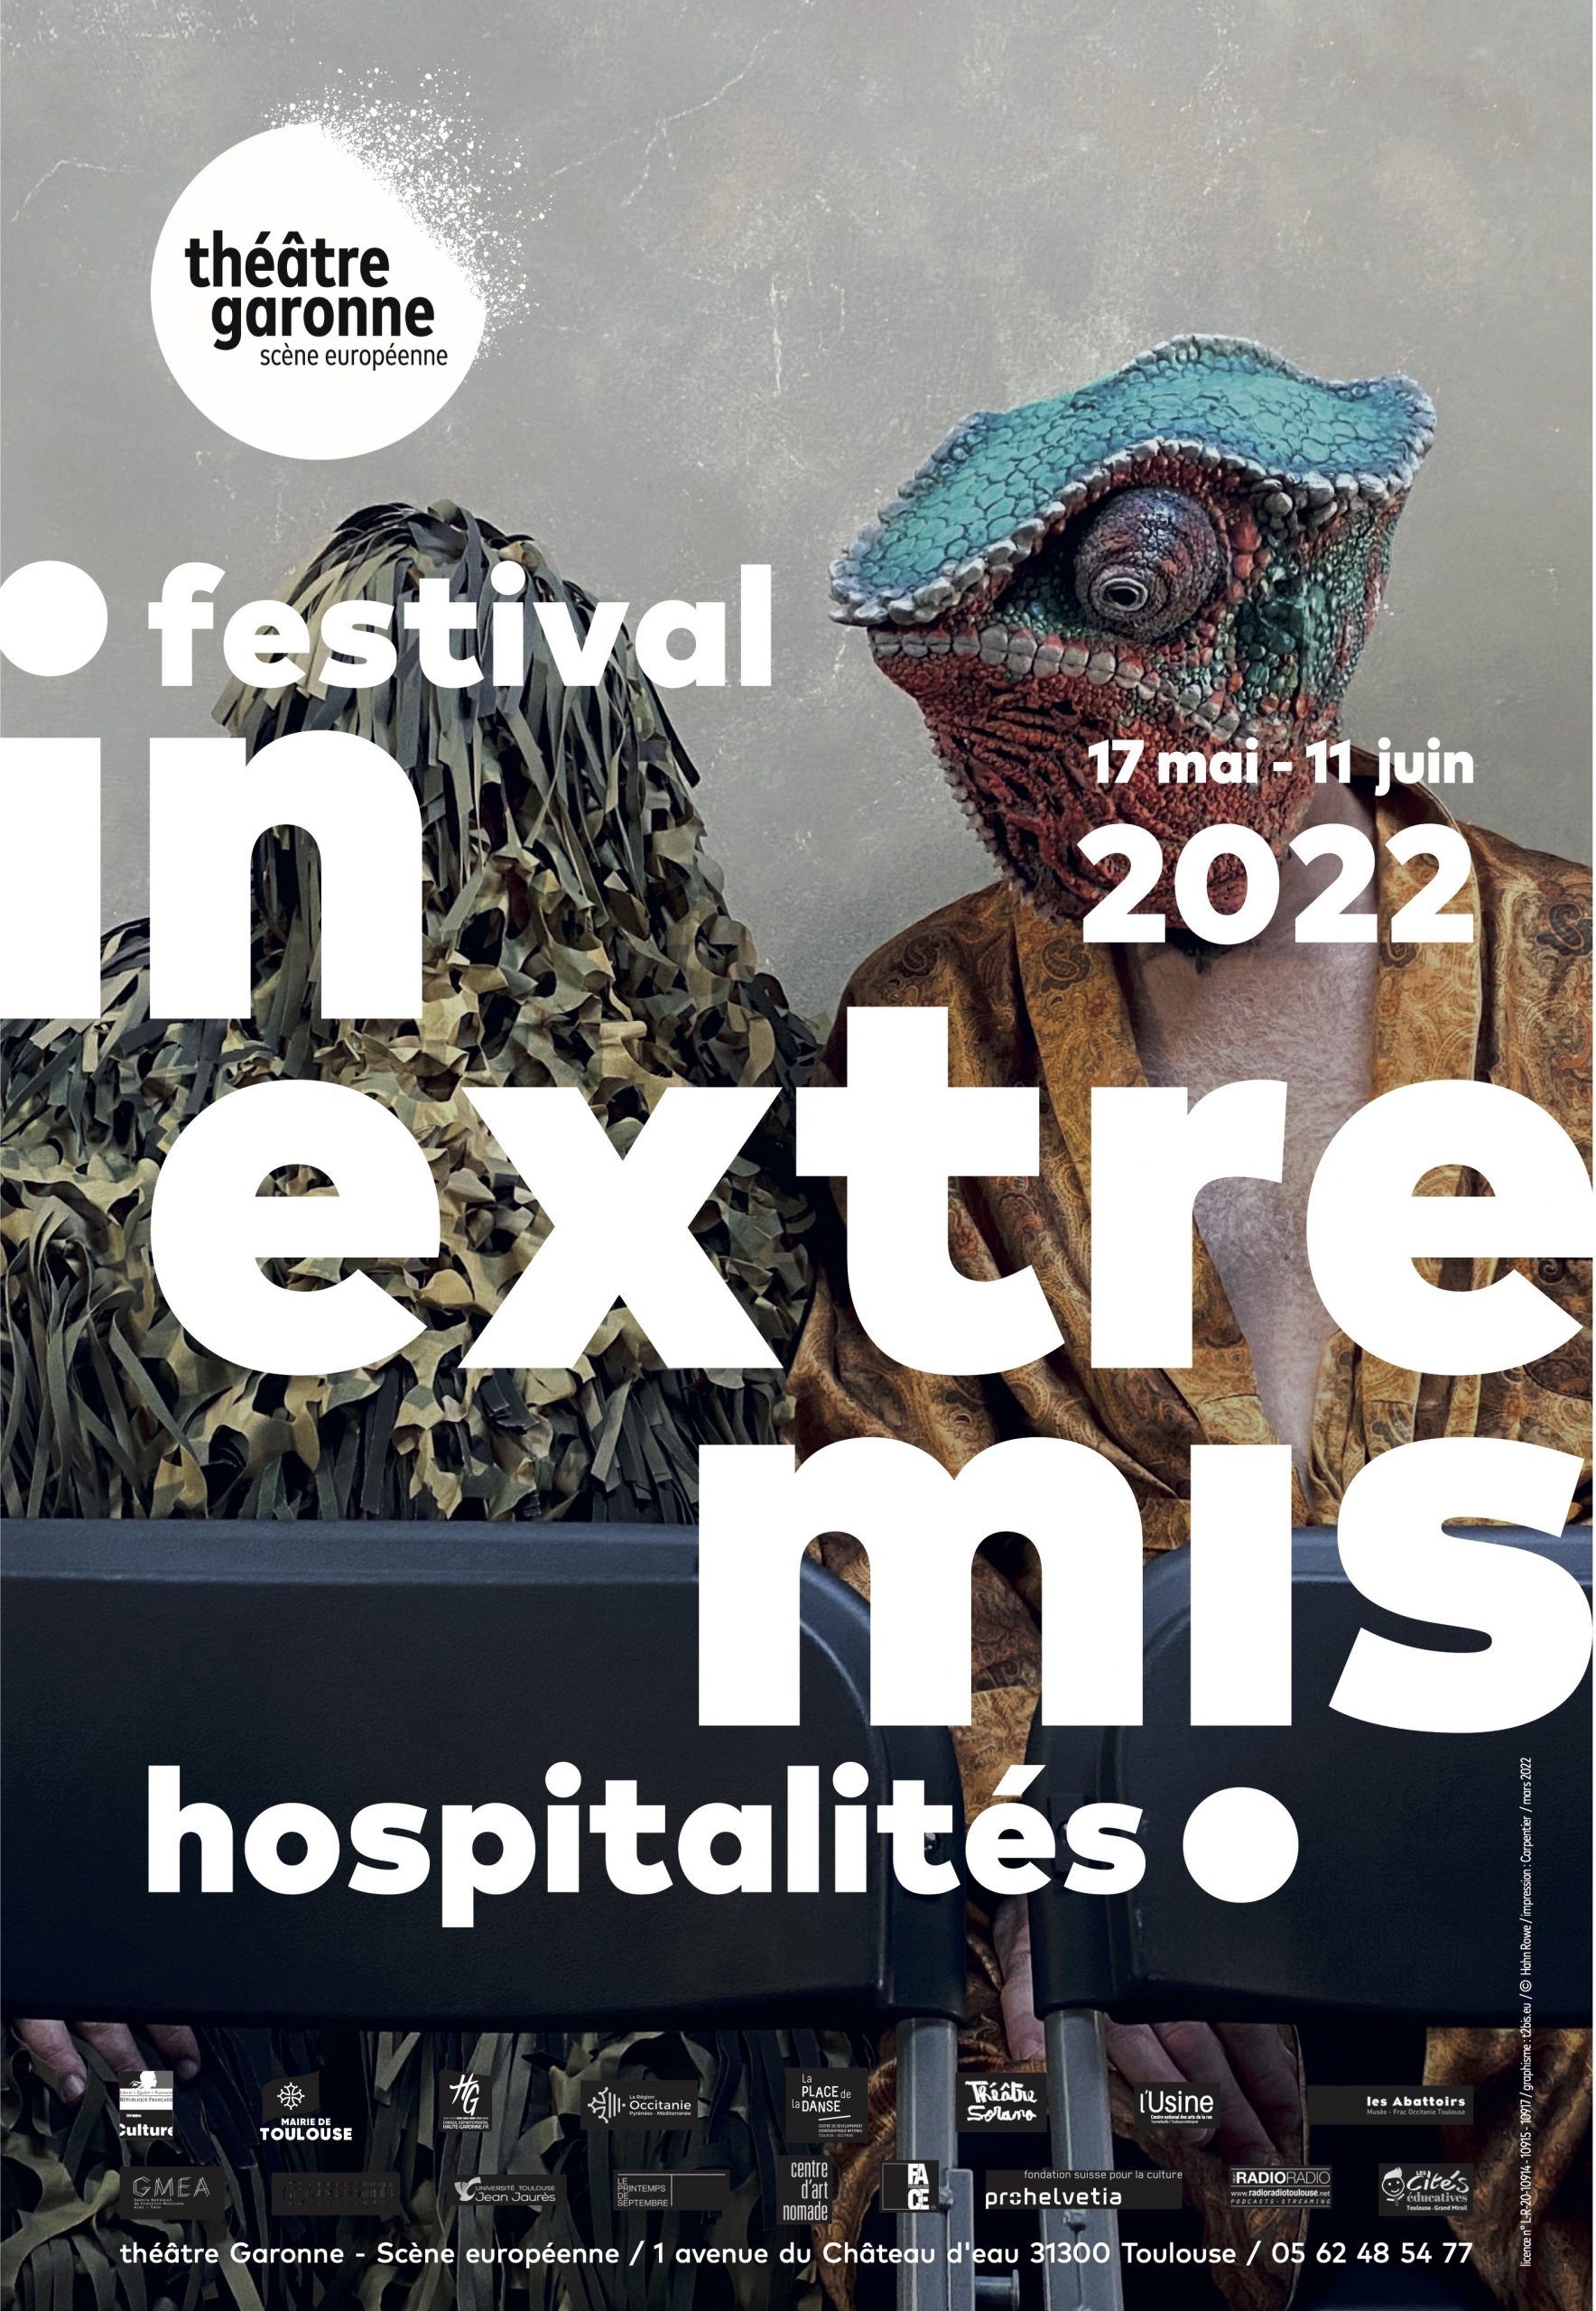 théâtre Garonne - Festival in Extremis